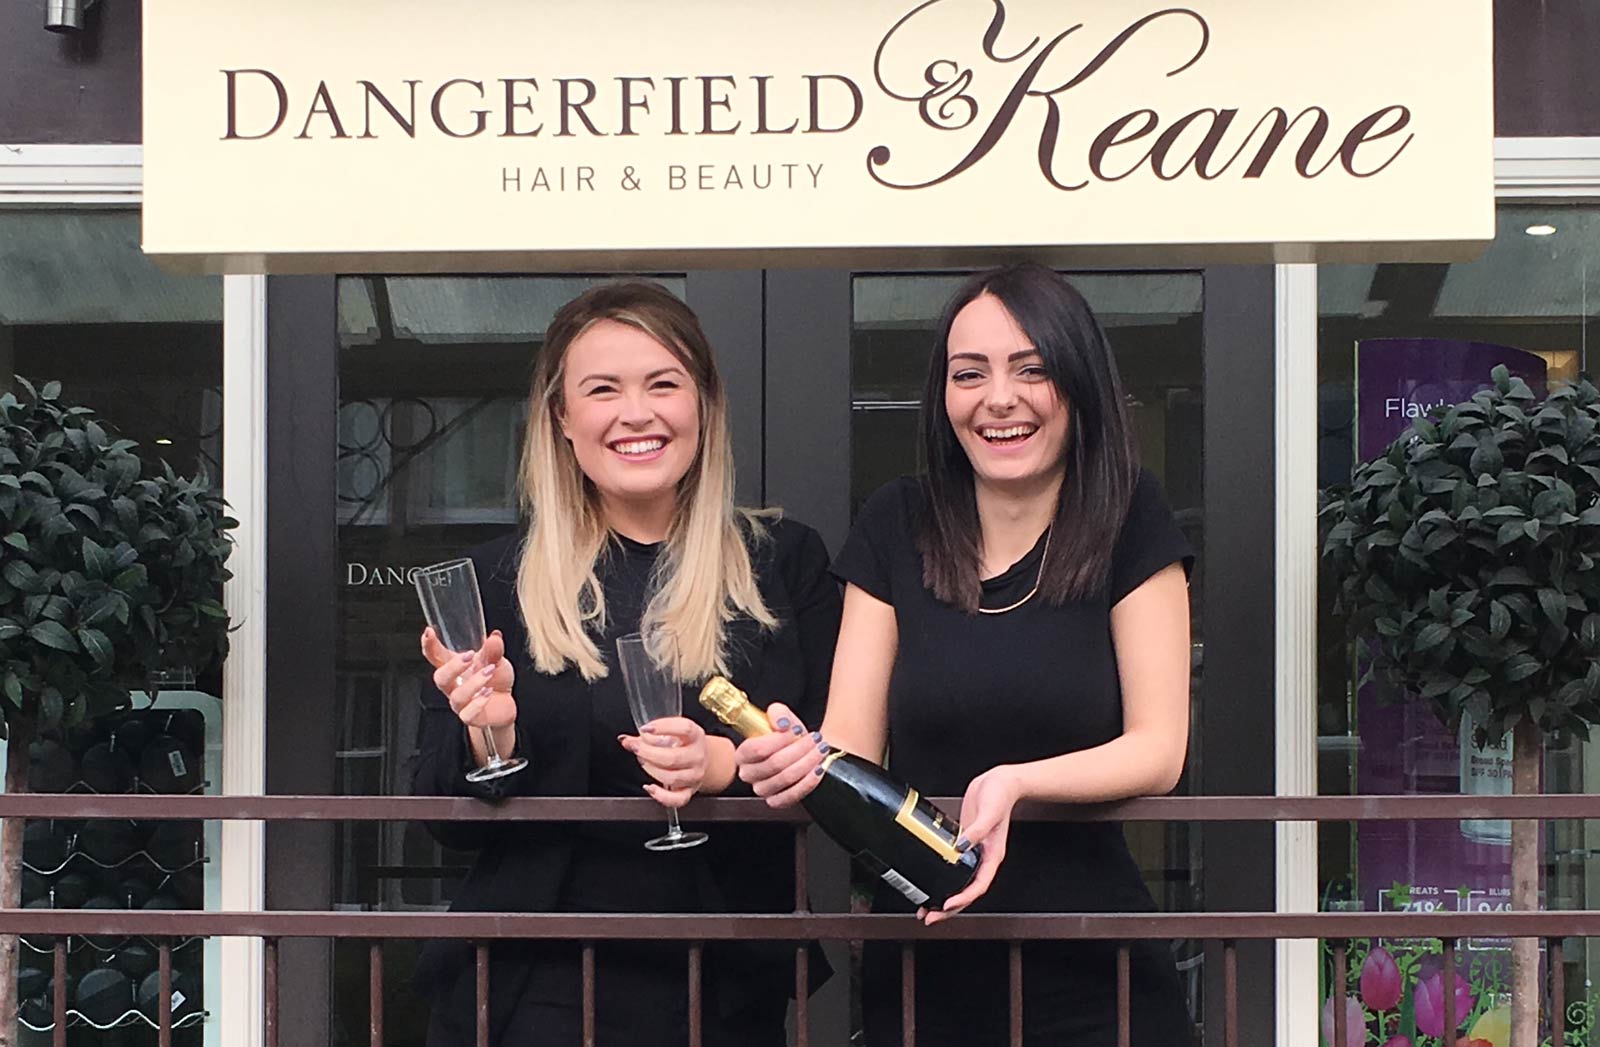 Kate Borgen (left) and Rachel Hodgson celebrating outside the Dangerfield & Keane salon on Coldbath Road, Harrogate